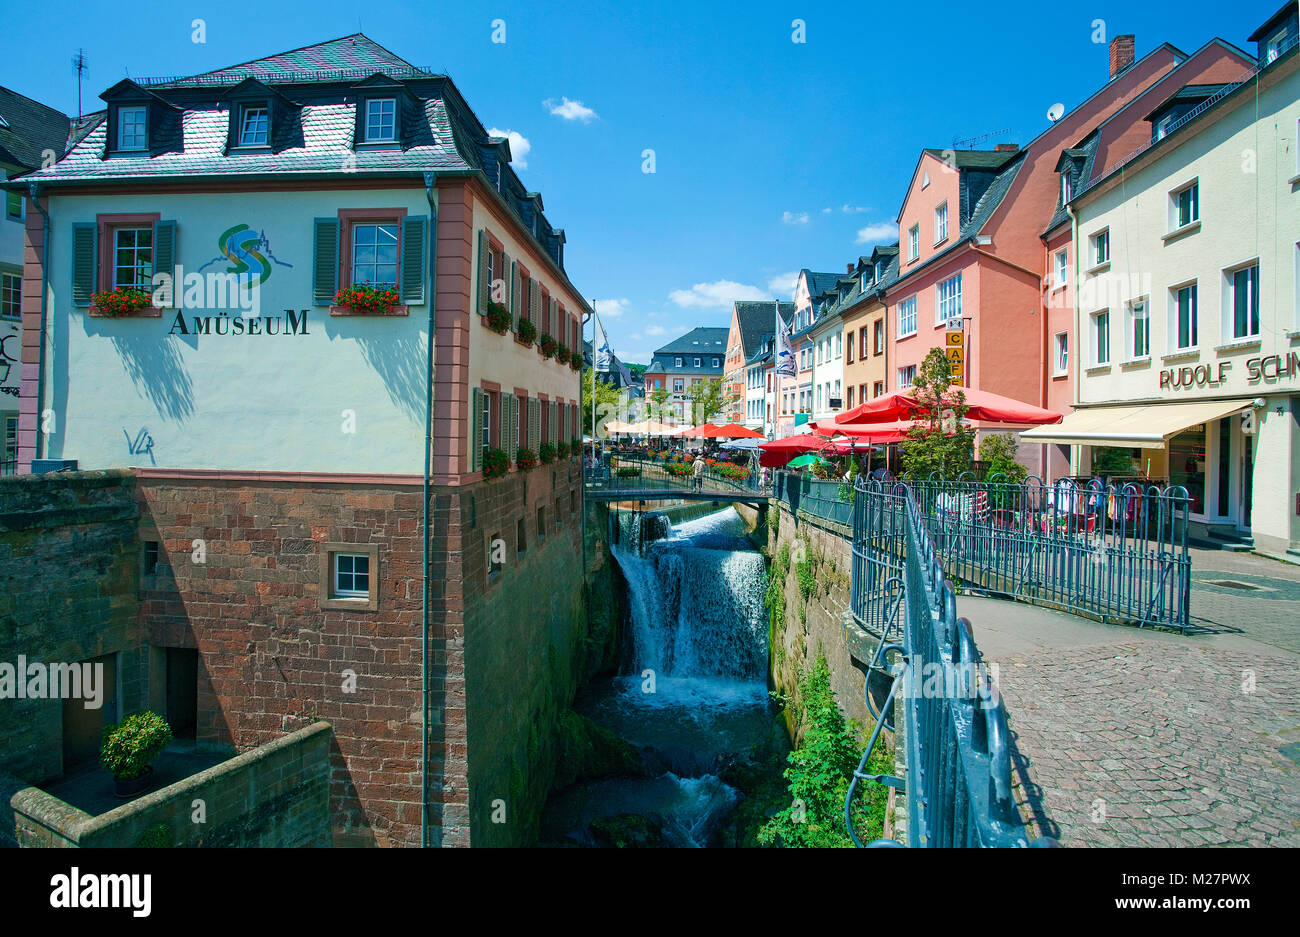 The Leukbach waterfall at old town of Saarburg, Rhineland-Palatinate, Germany, Europe Stock Photo